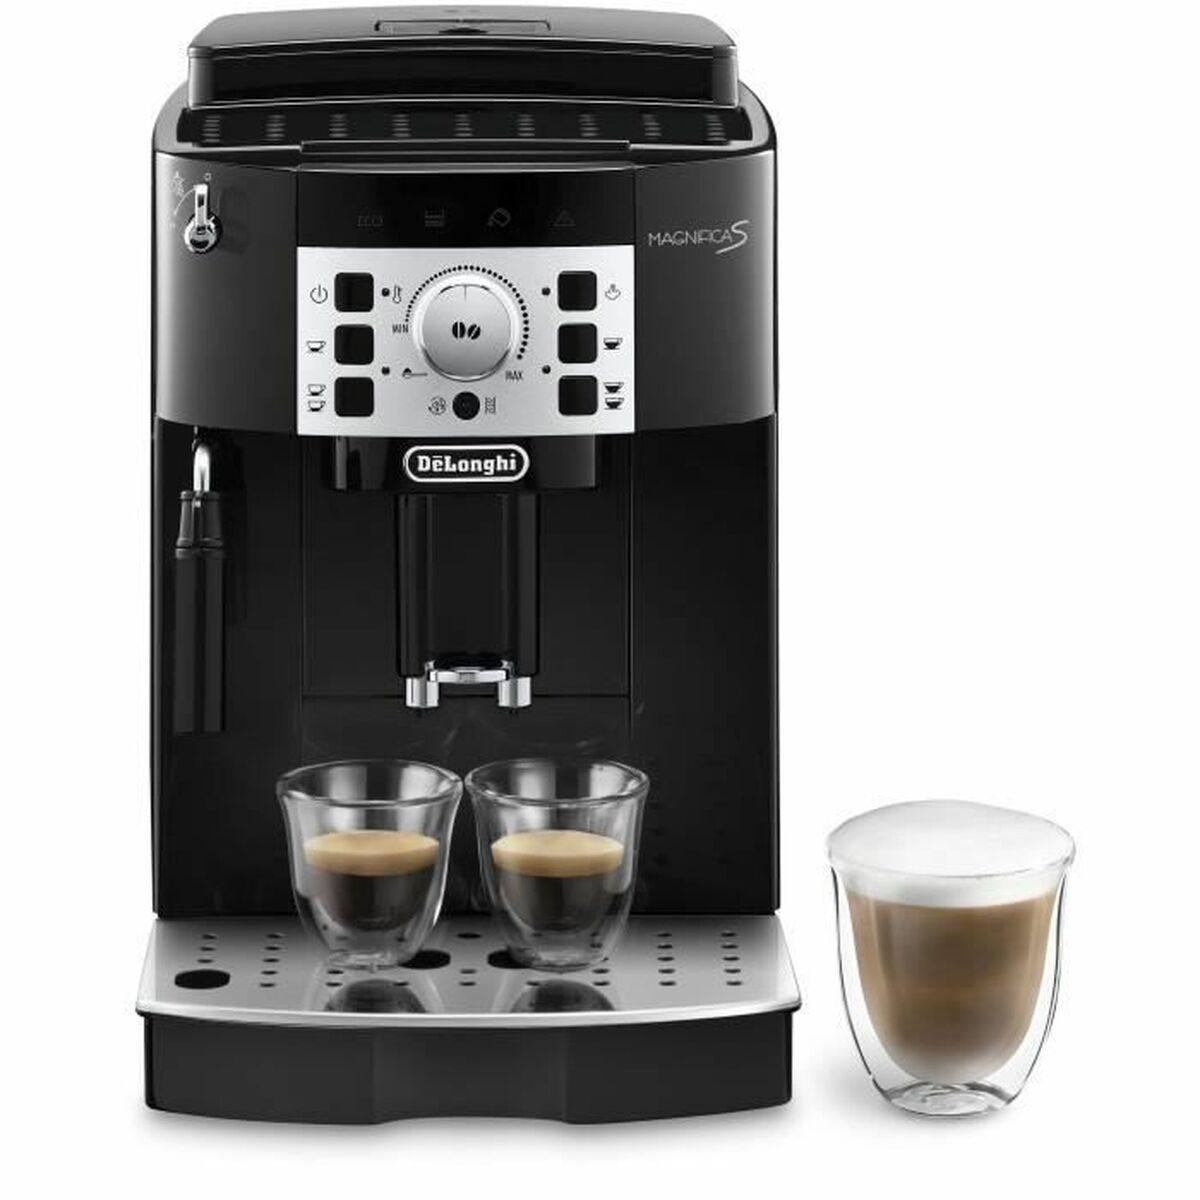 Superautomatic Coffee Maker DeLonghi ECAM22.140.B 1450 W Black 1450 W